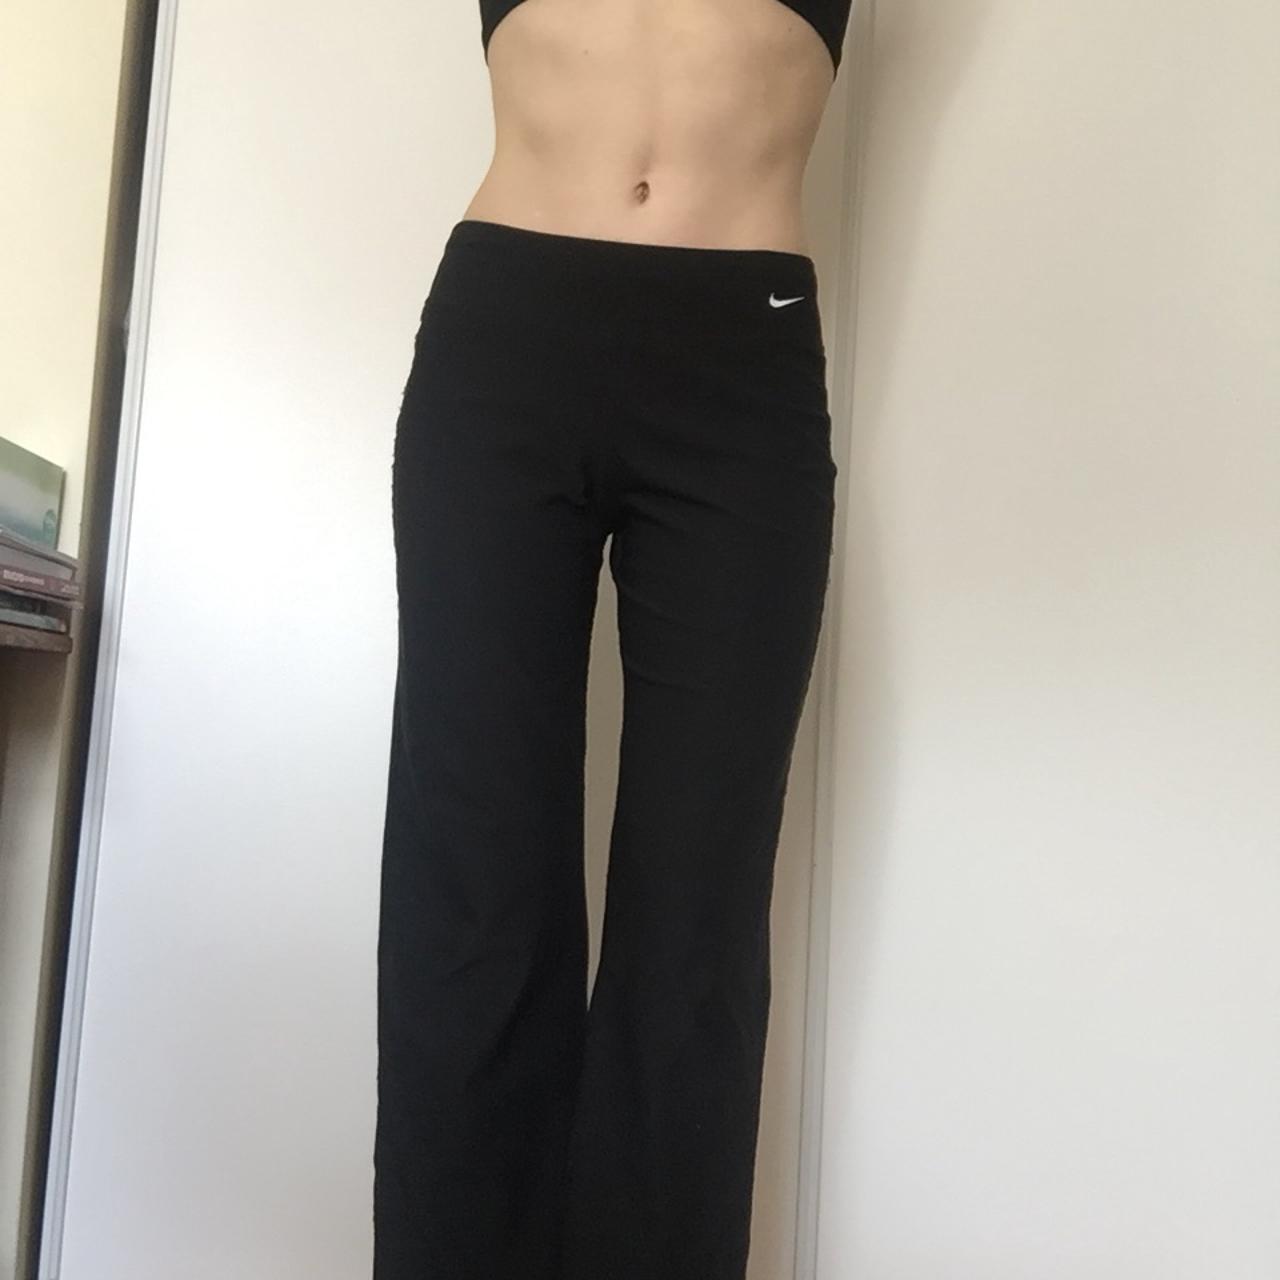 Yogalicous flared yoga pants with seam split leg - Depop